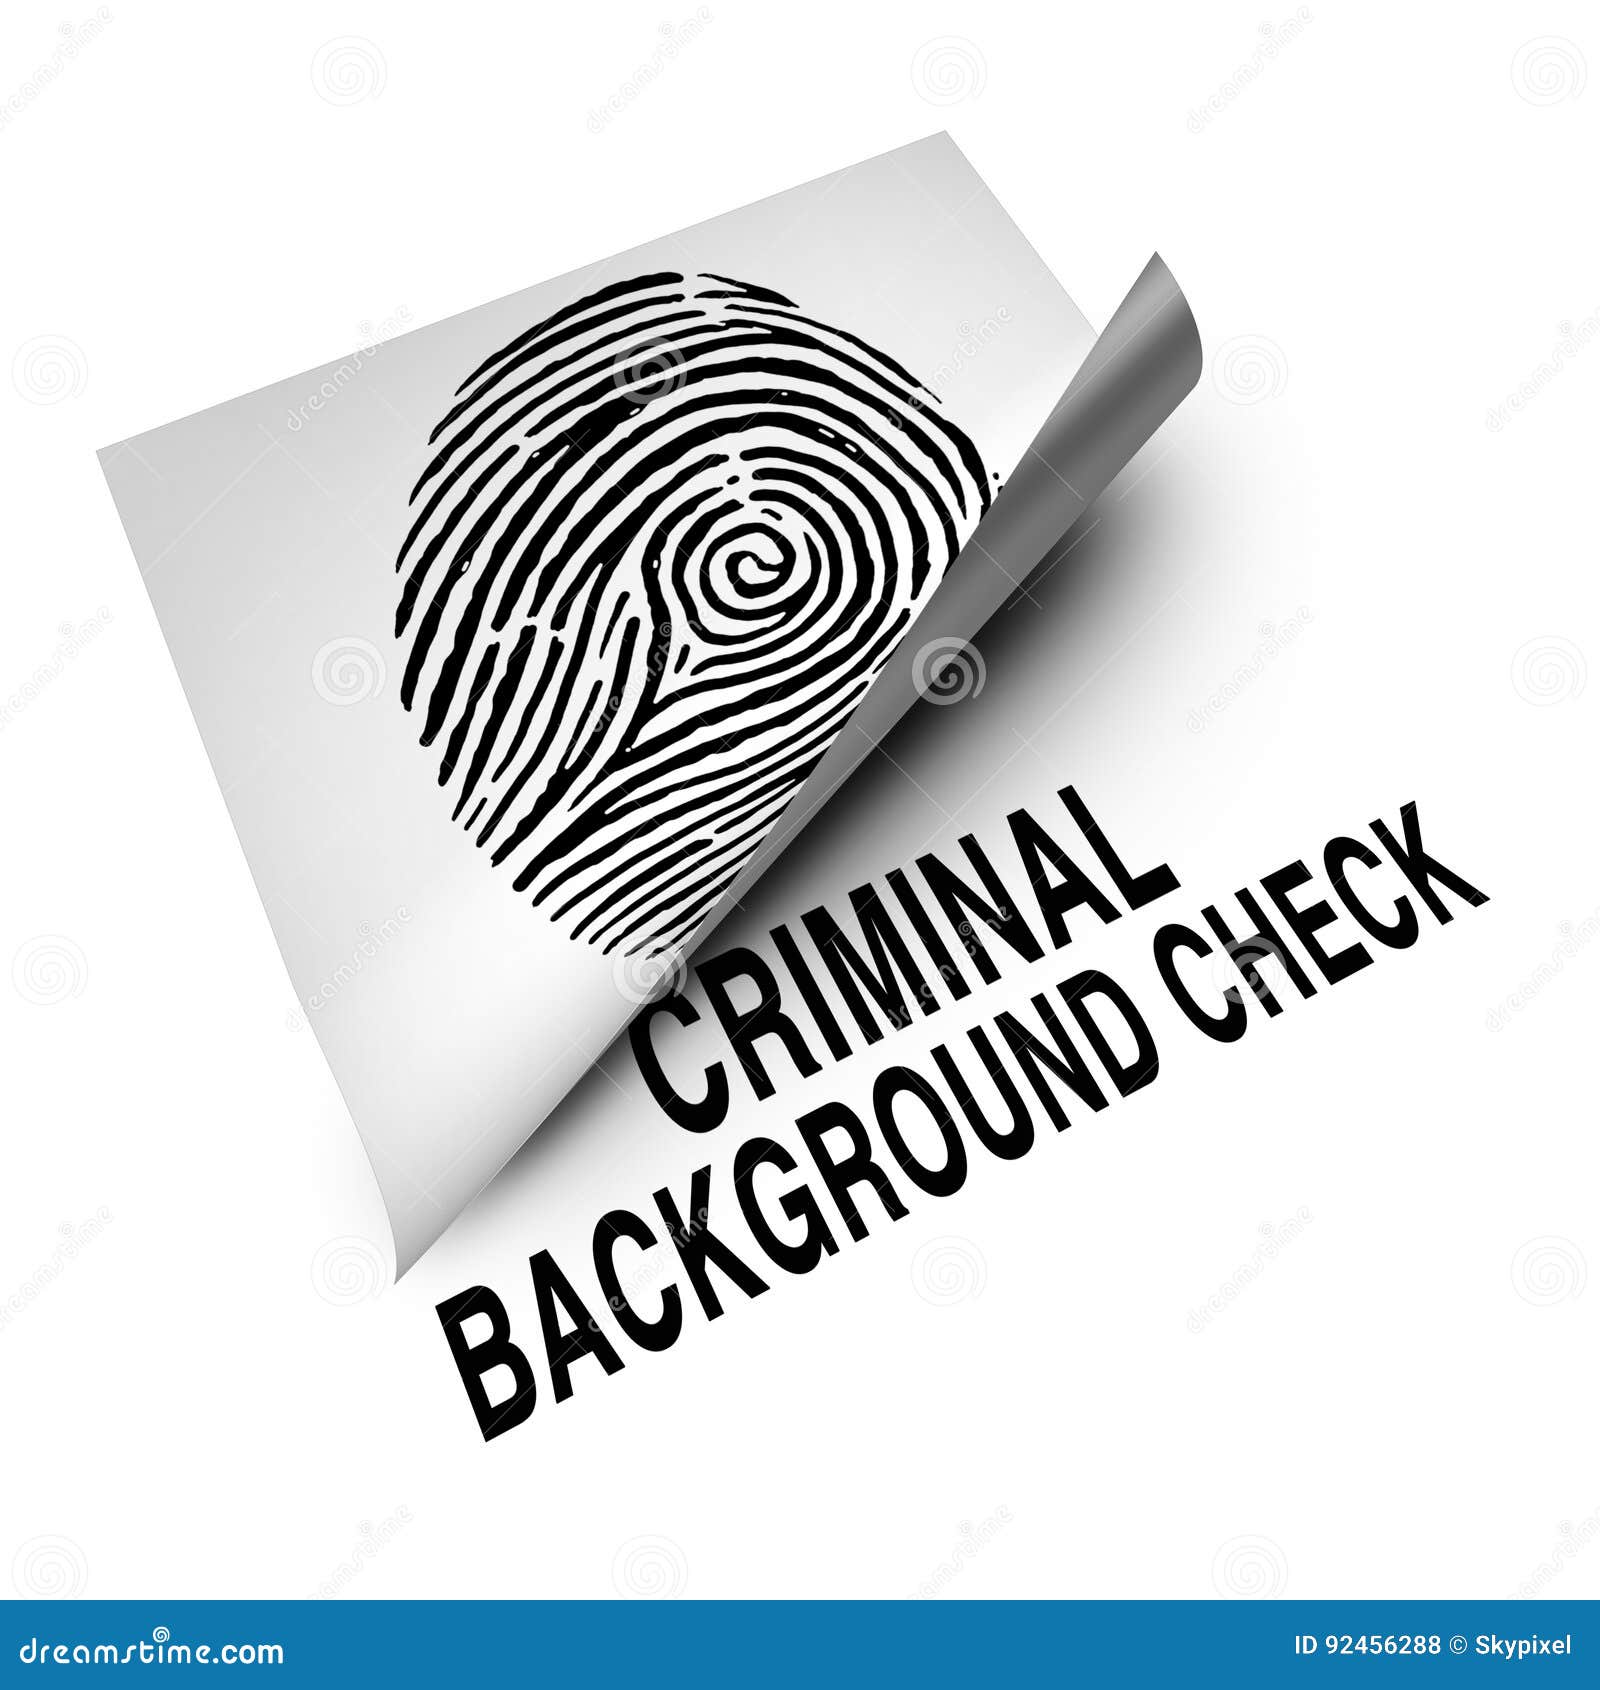 Criminal Background Check stock illustration. Illustration of verify -  92456288